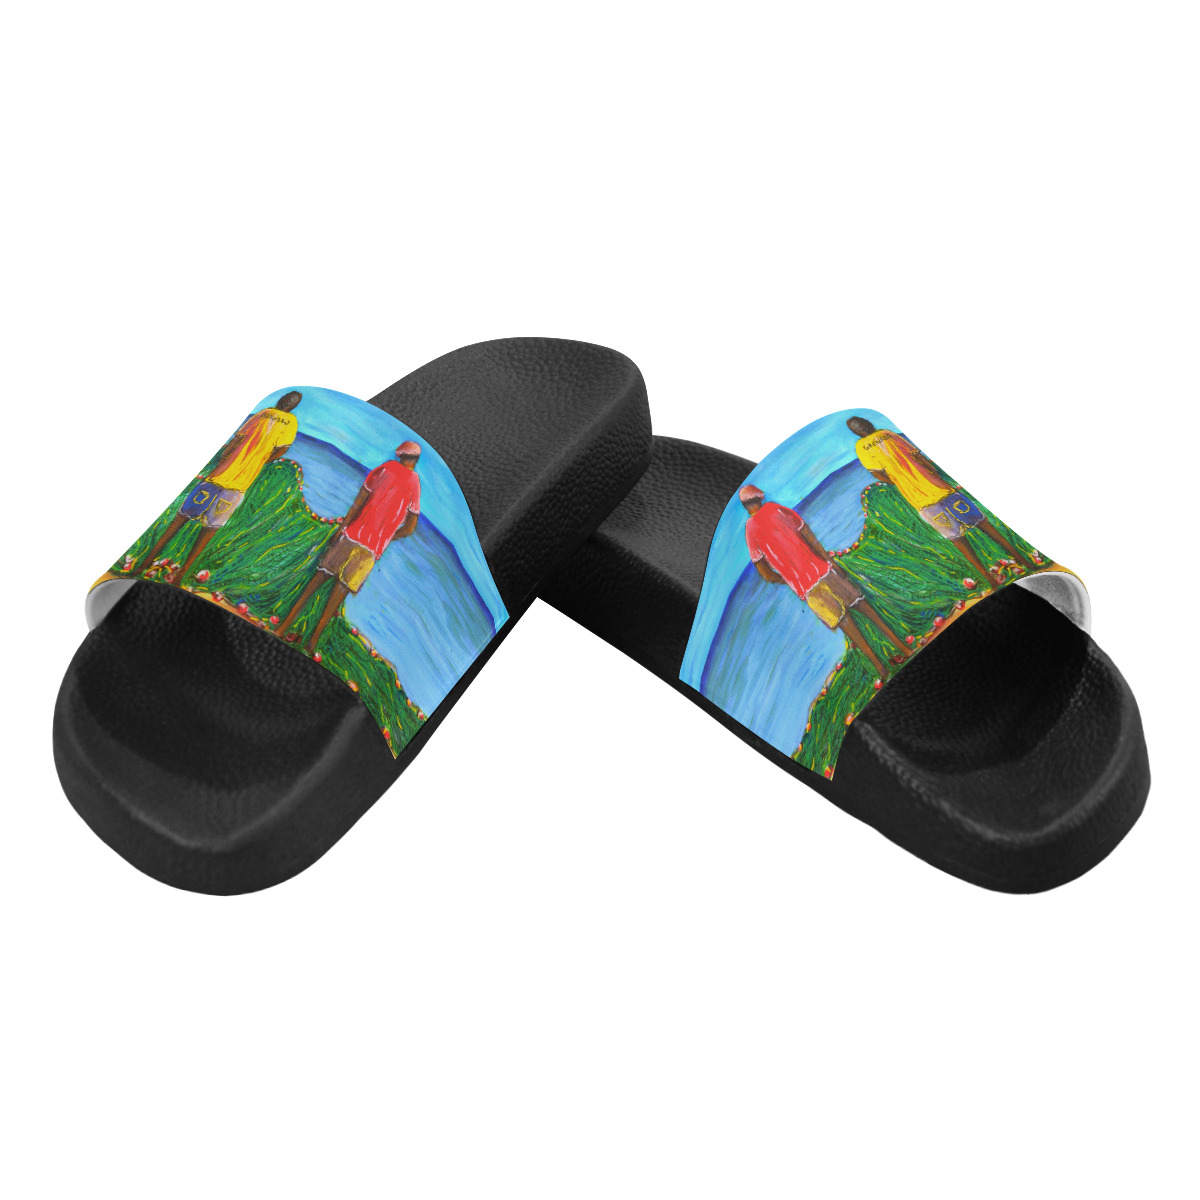 manusartgnd Women's Slide Sandals (Model 057)